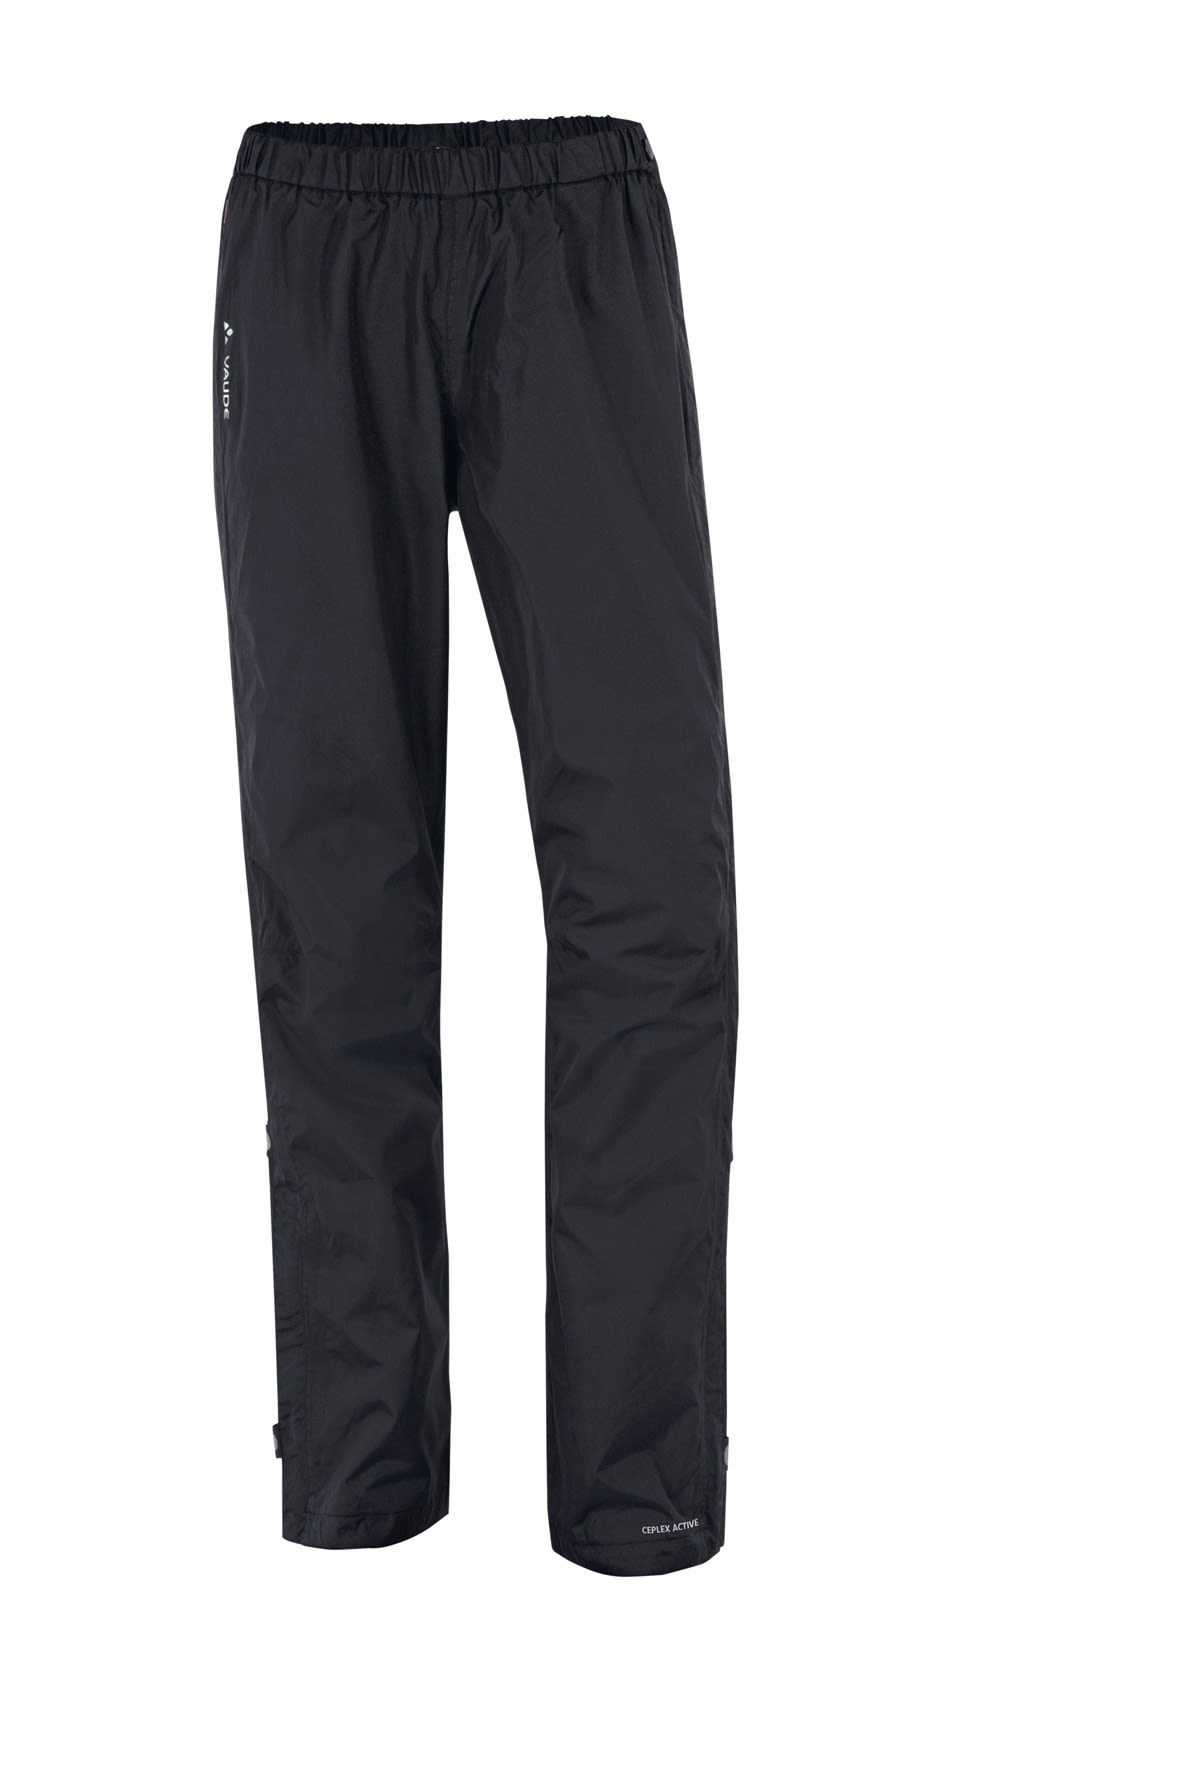 Vaude Fluid Full-Zip Pants Schwarz- Female Hosen- Grsse 42 - Short - Farbe Black unter Vaude